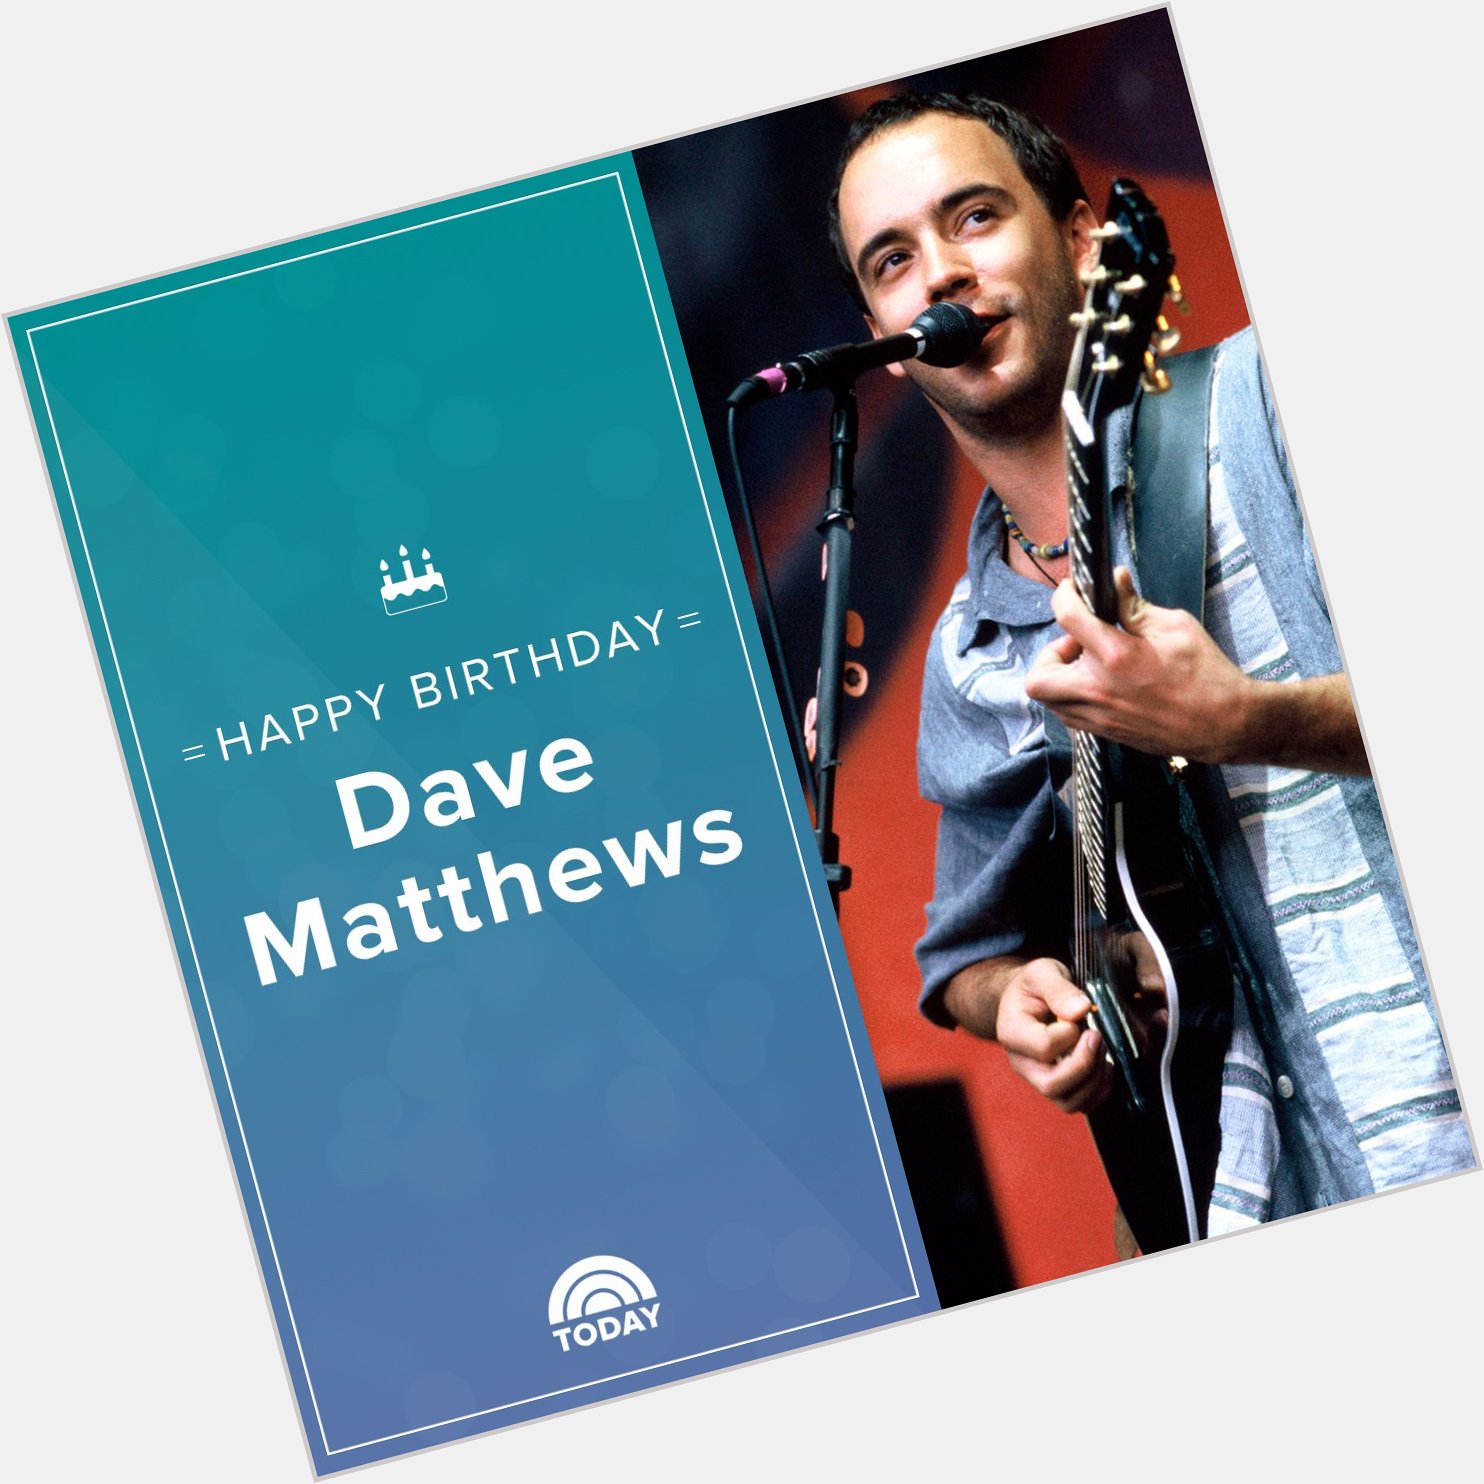 Happy birthday, Dave Matthews! 